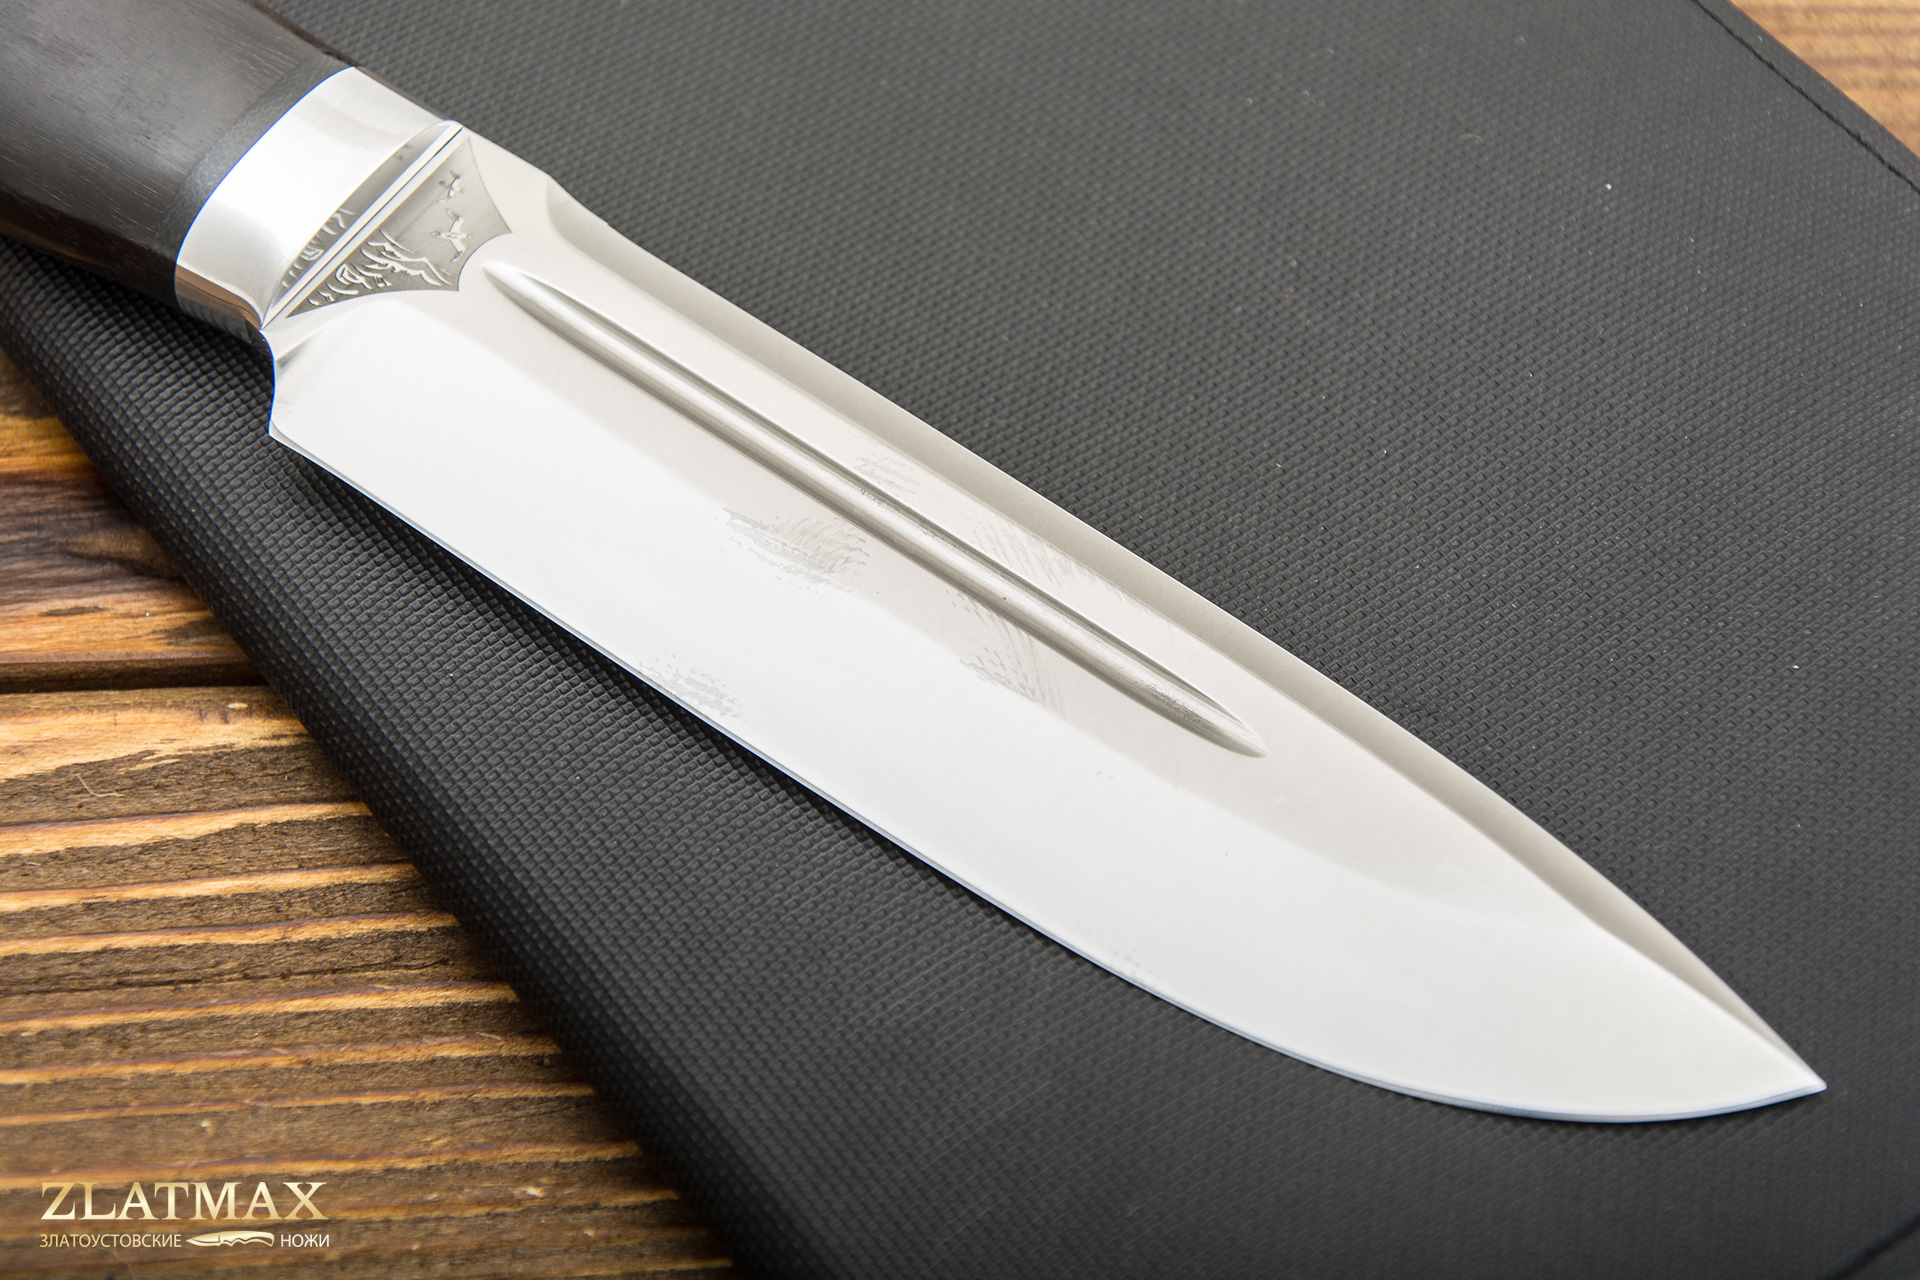 Нож Селигер (ЭП-766, Граб, Алюминий)